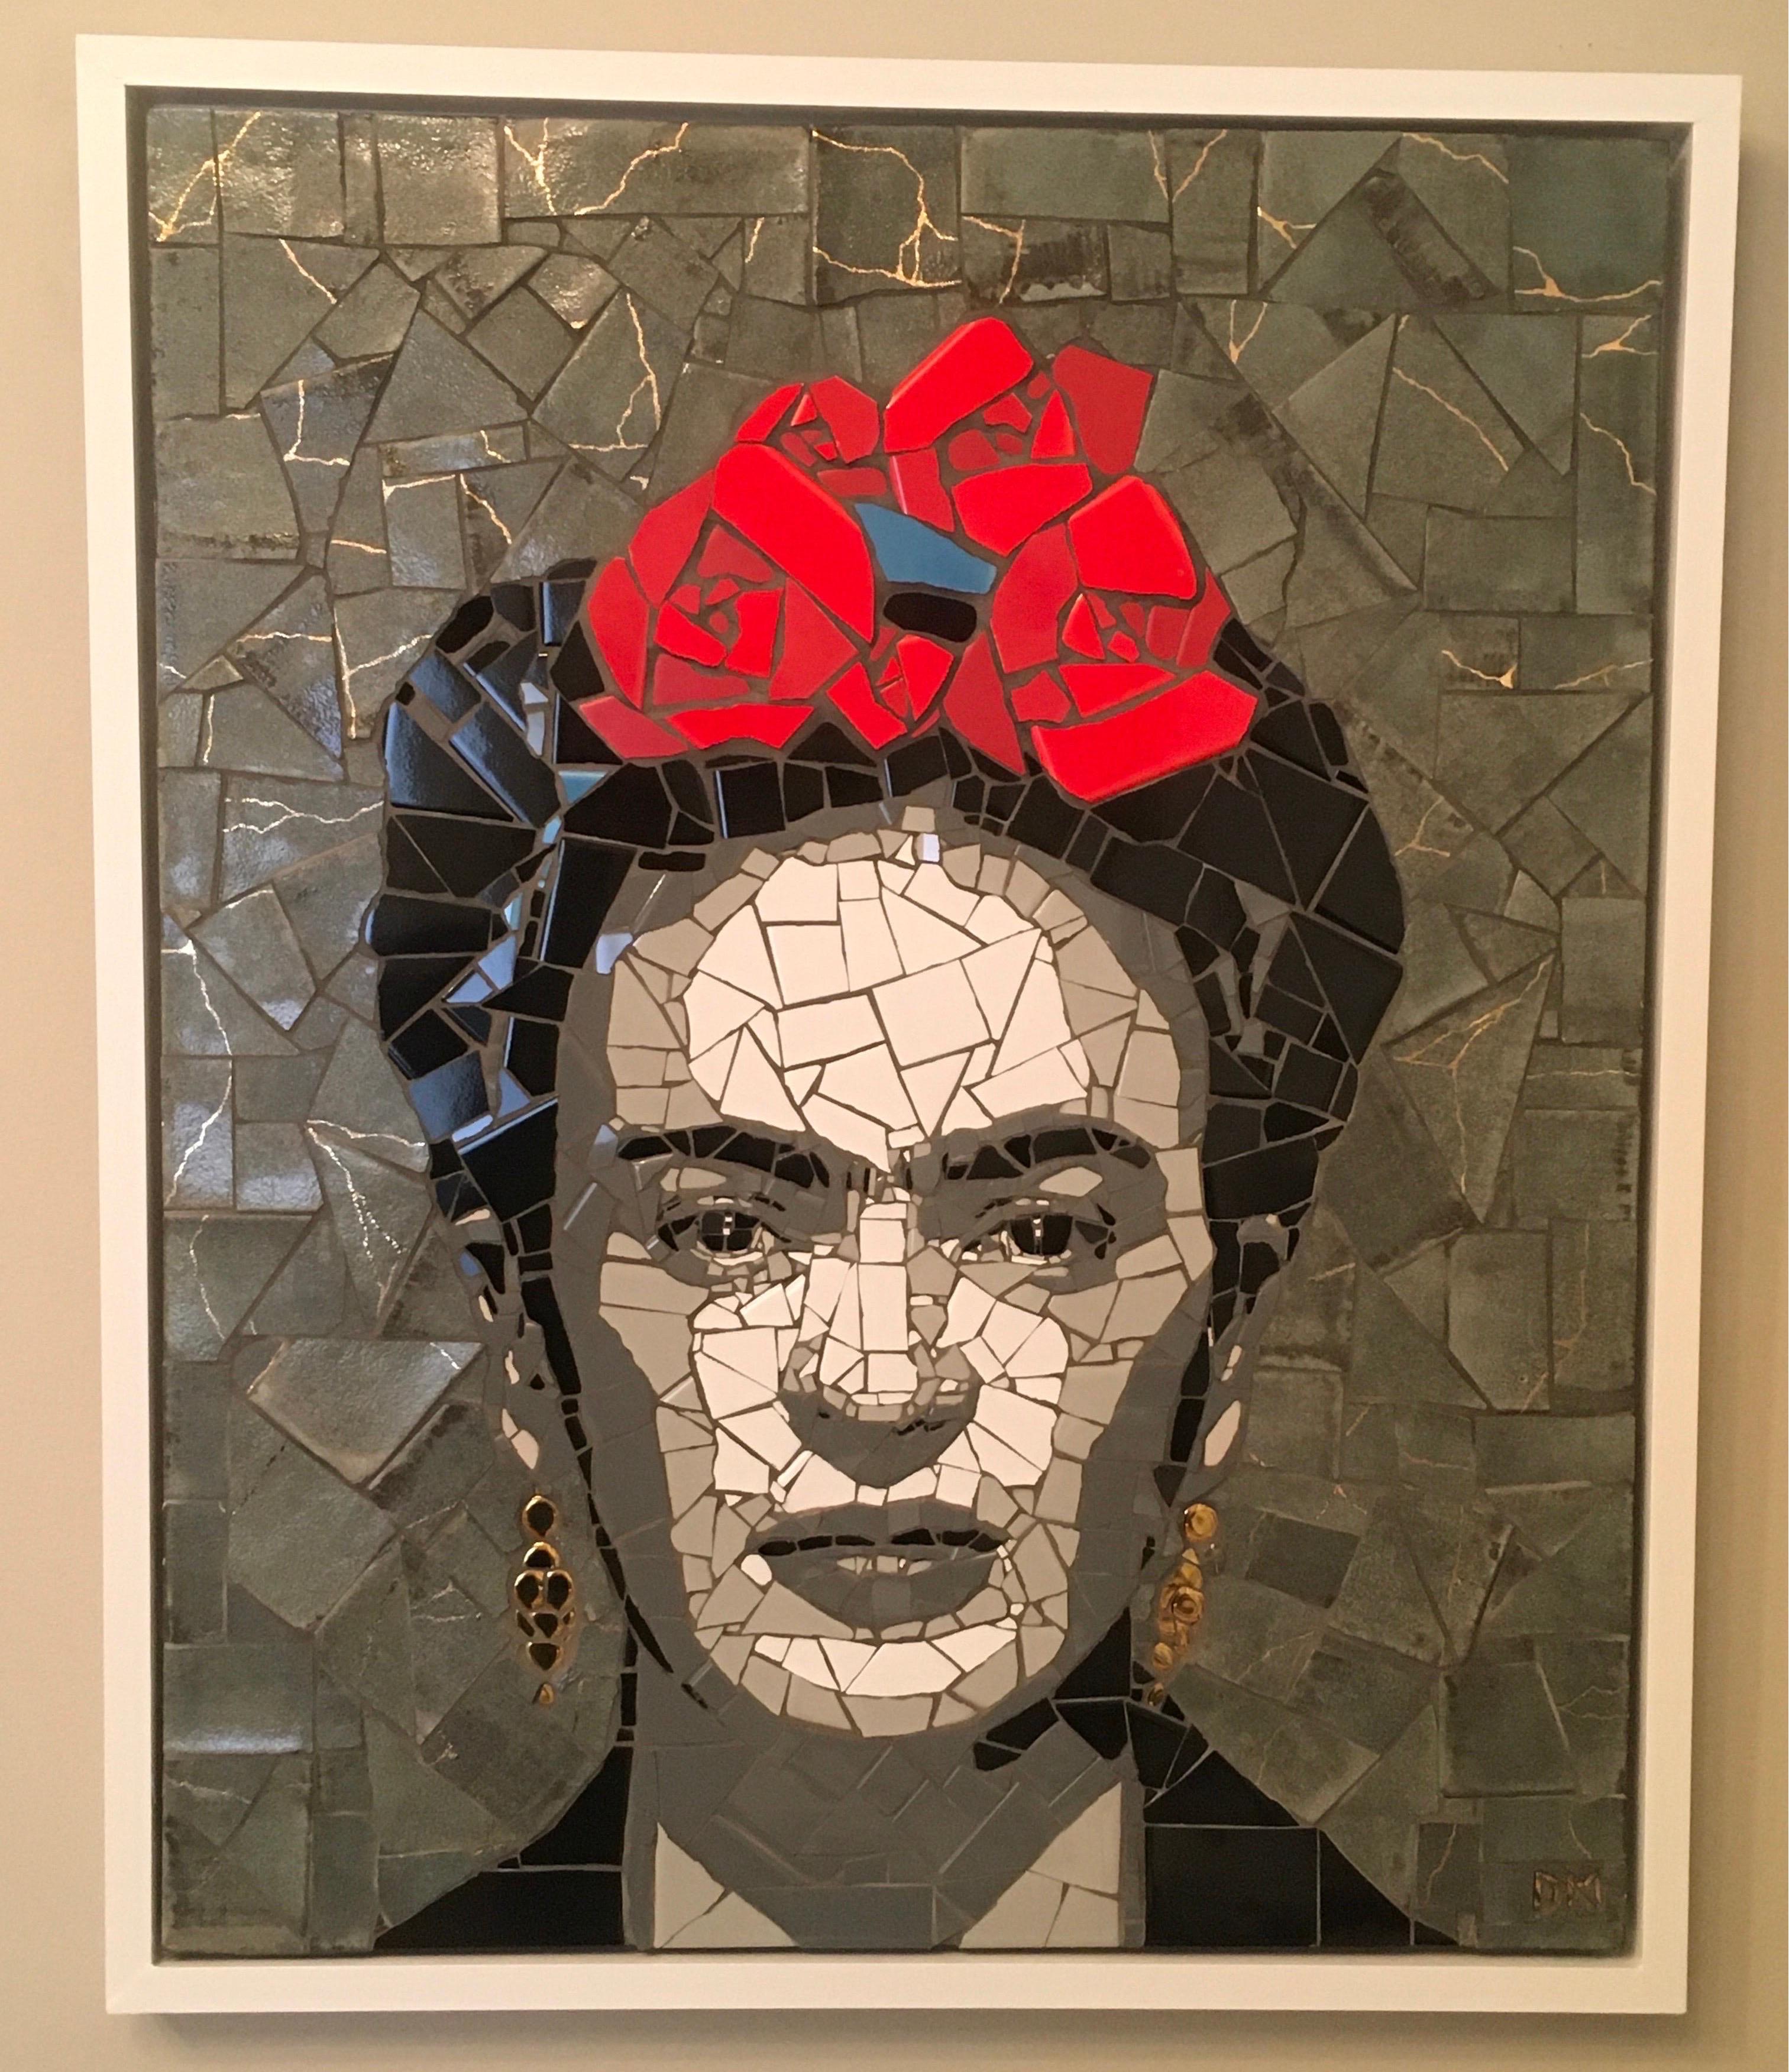 Frida Kahlo, mosaic, portrait, original artwork, dimensional - Mixed Media Art by Dean Moore